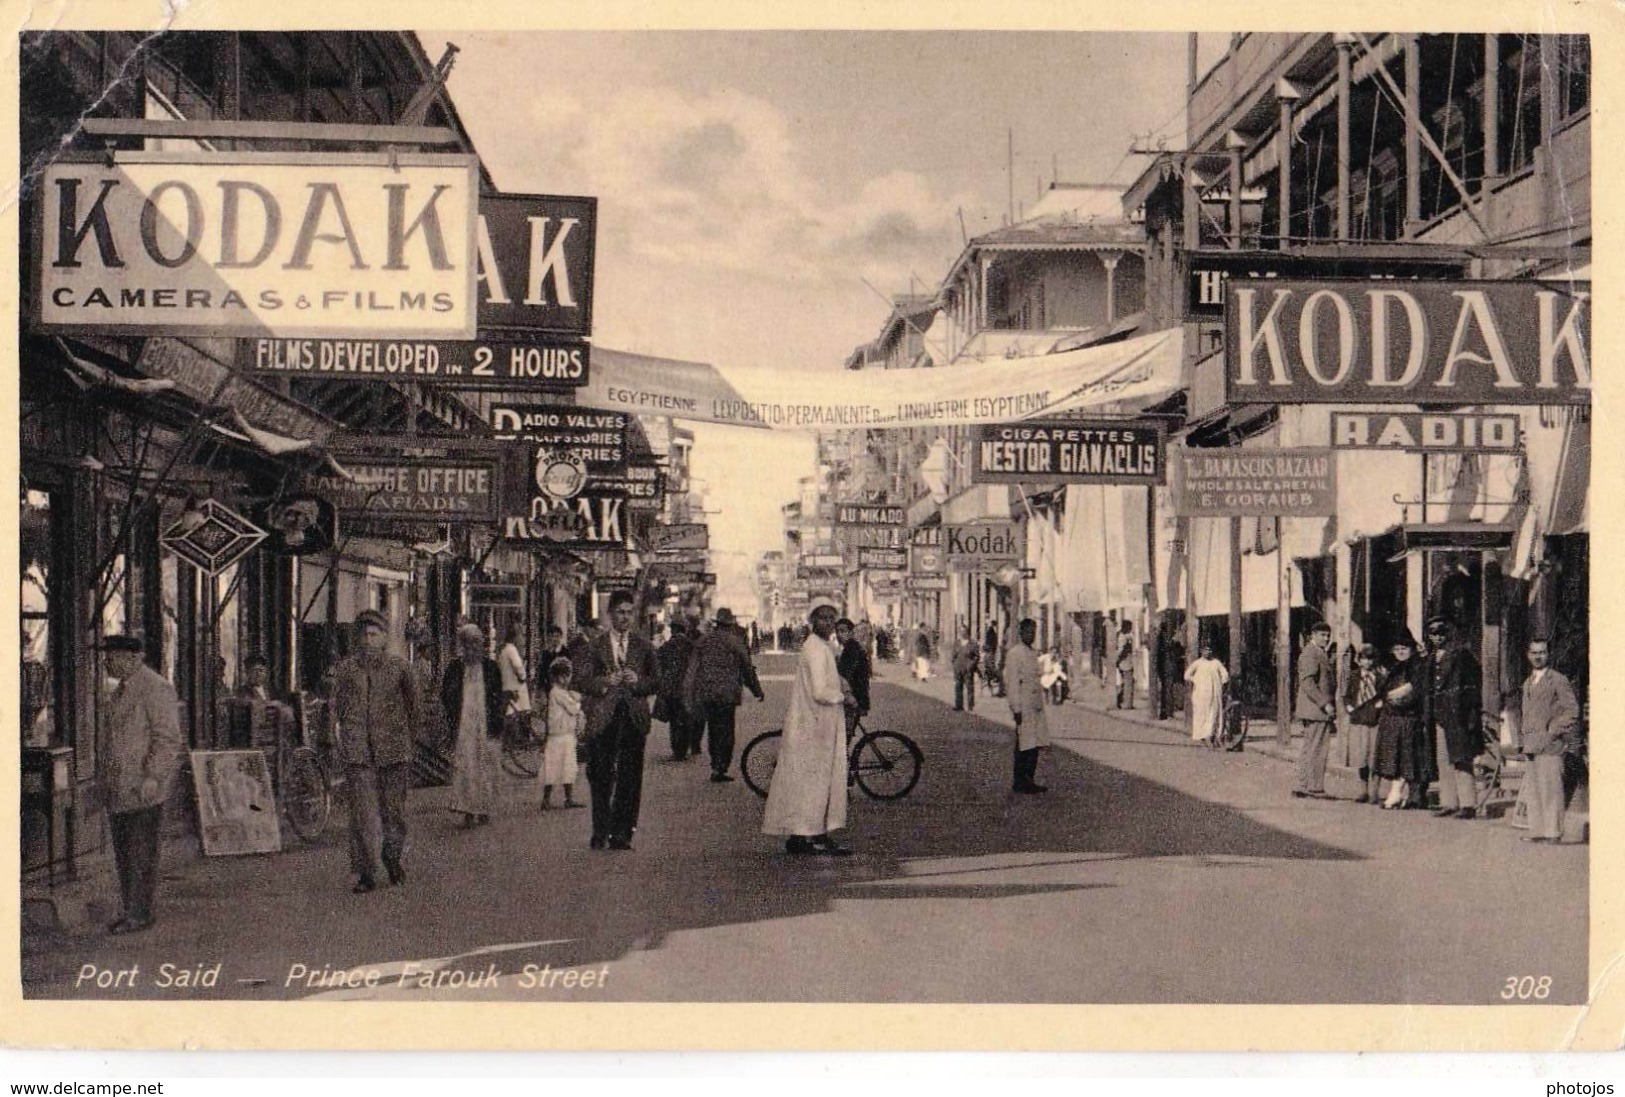 Postcard :Port Saïd (Egypte) Prince Farouk Street   Oriental Bureau Pub Cameras & Films Kodak - Asiut